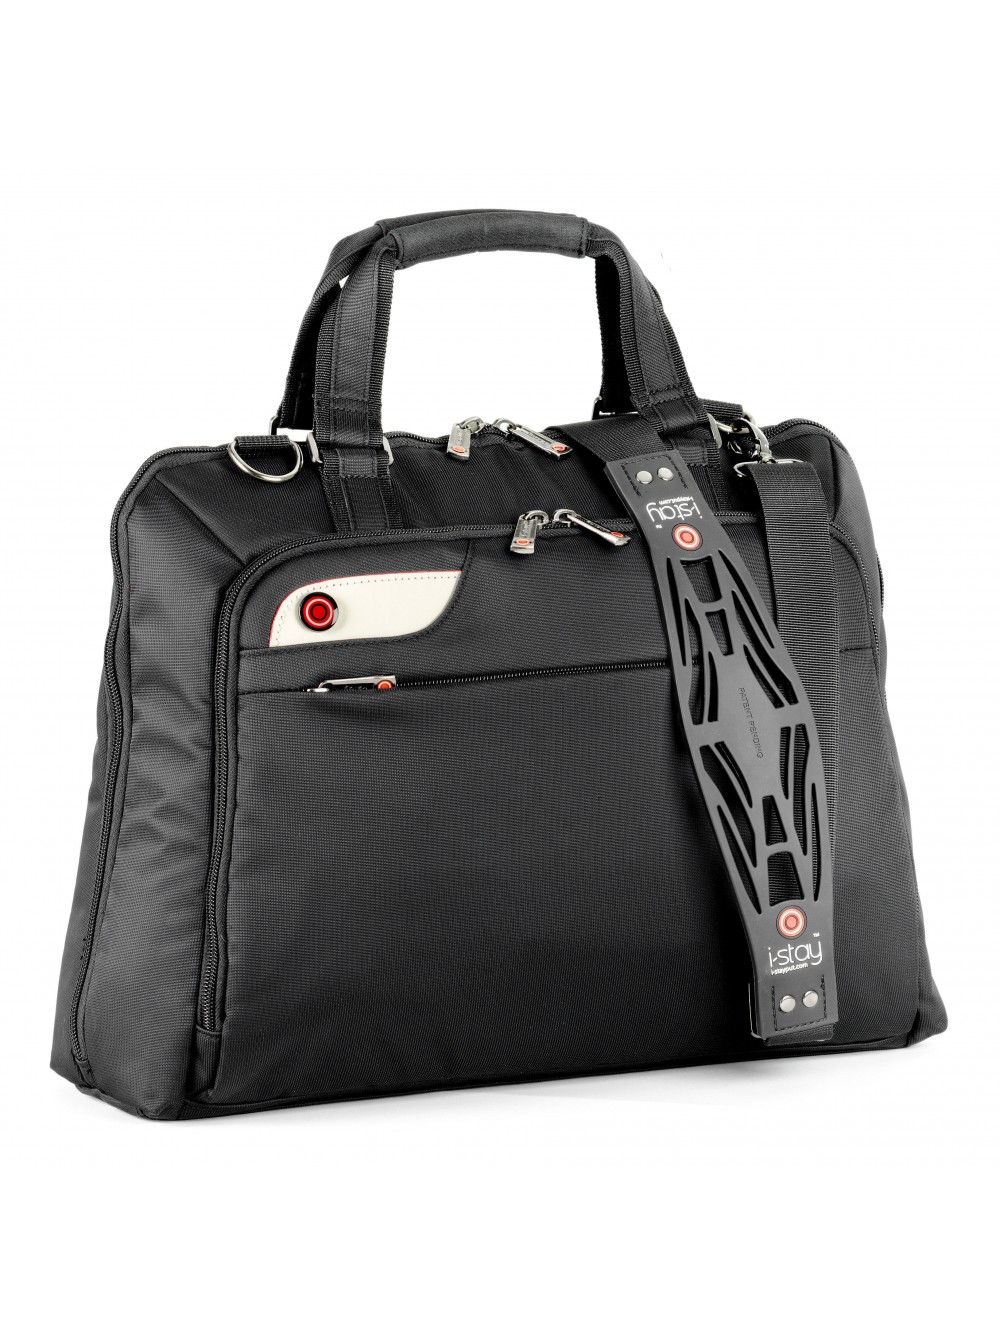 Brand Lady PU Leather Women Handbag Messenger Laptop Bag 15.6 Inch,Shoulder  Case For MacBook Air